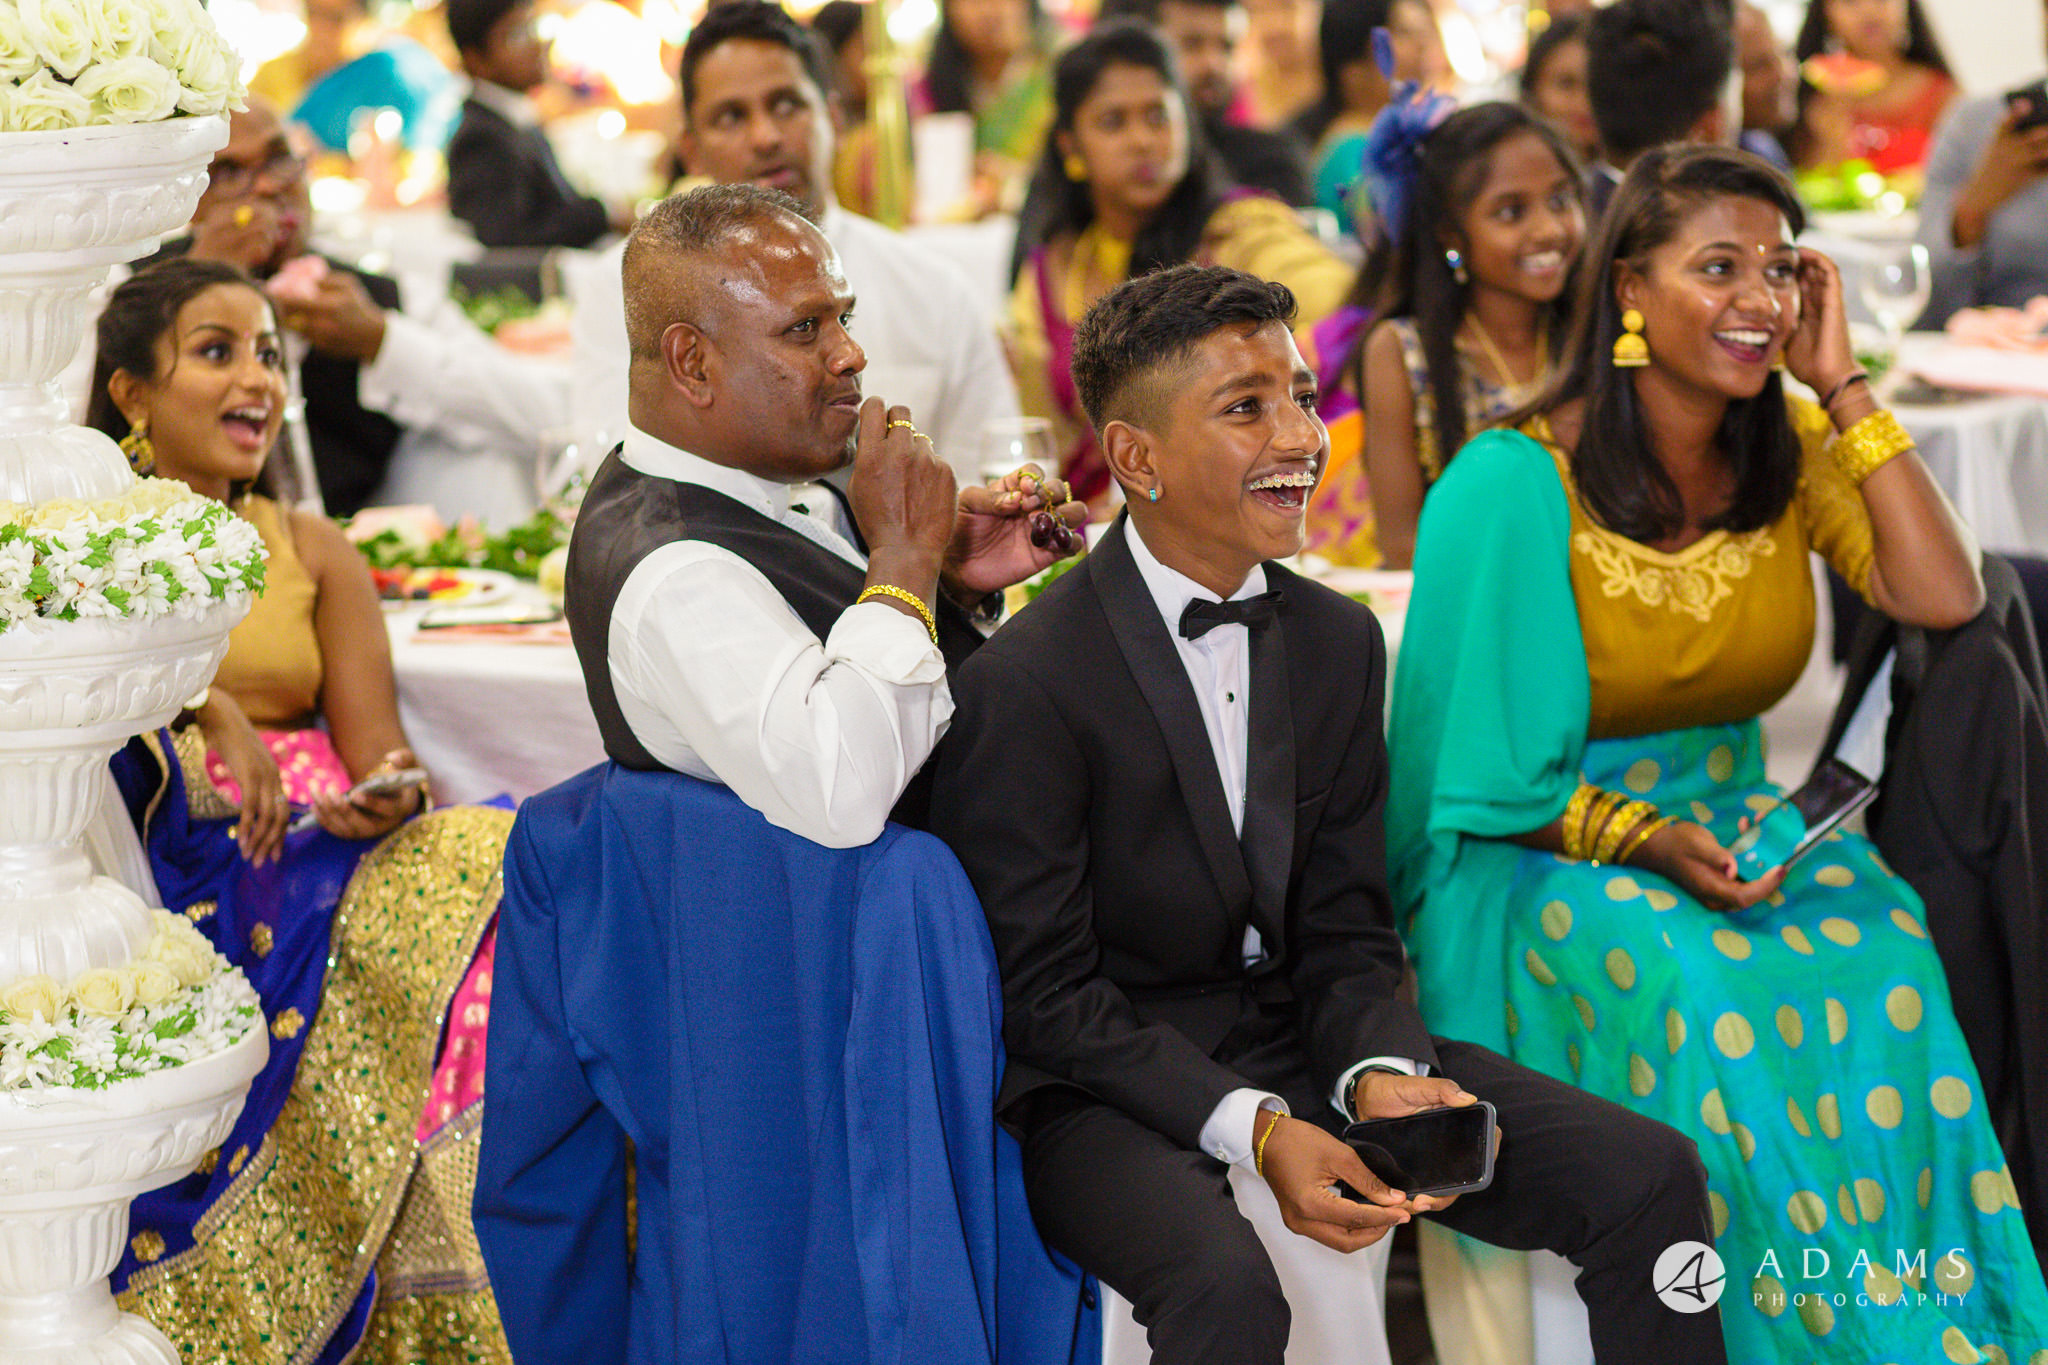 Oslo Tamil Wedding guests smile